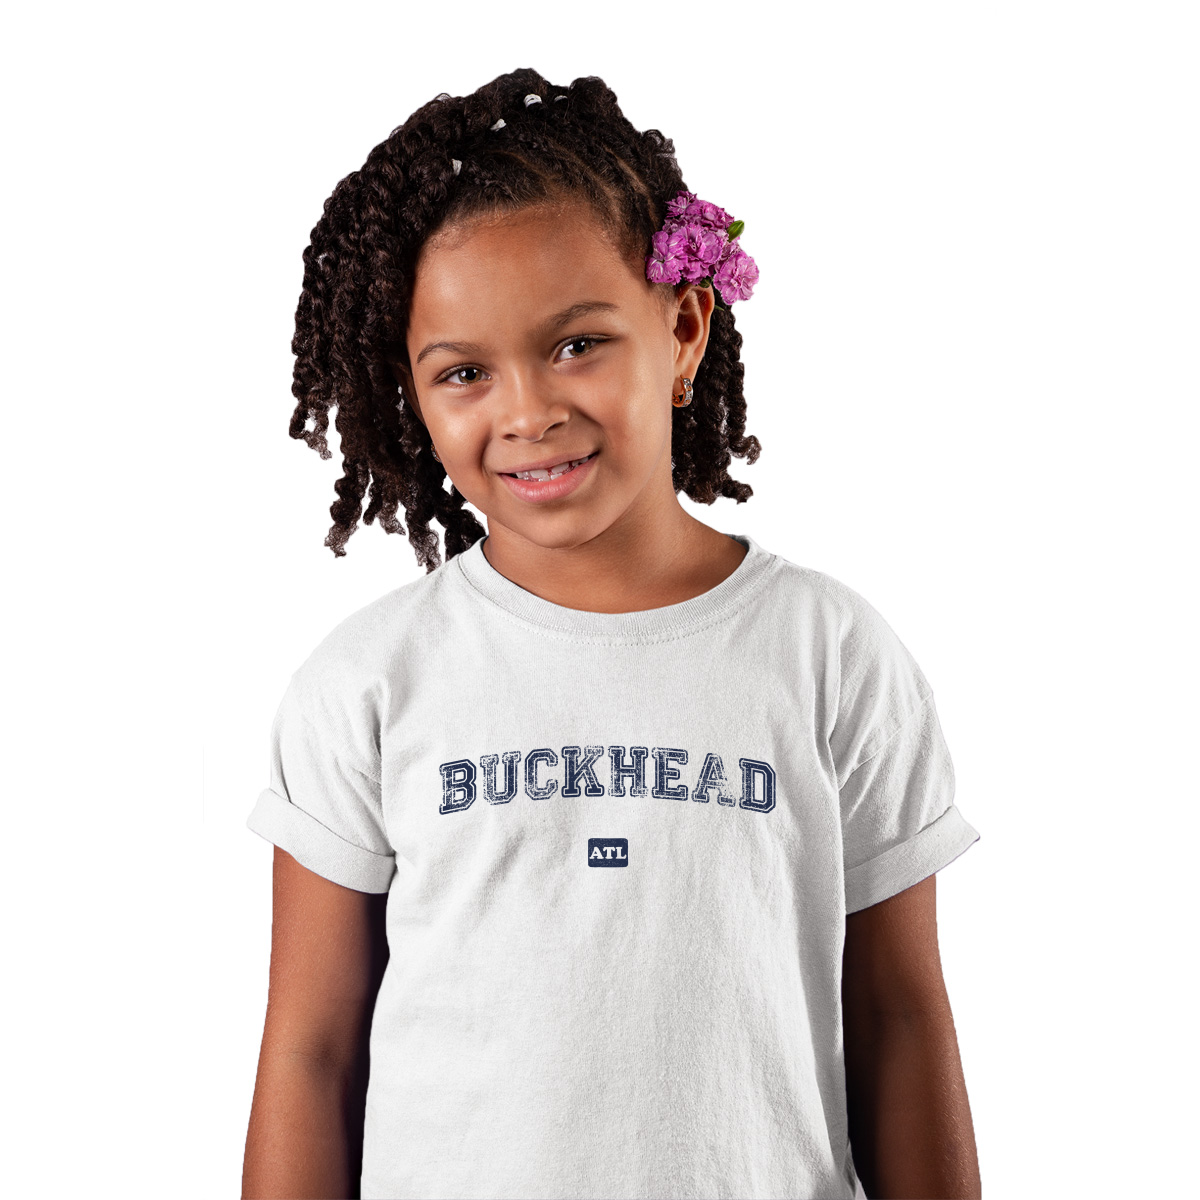 Buckhead ATL Represent Kids T-shirt | White